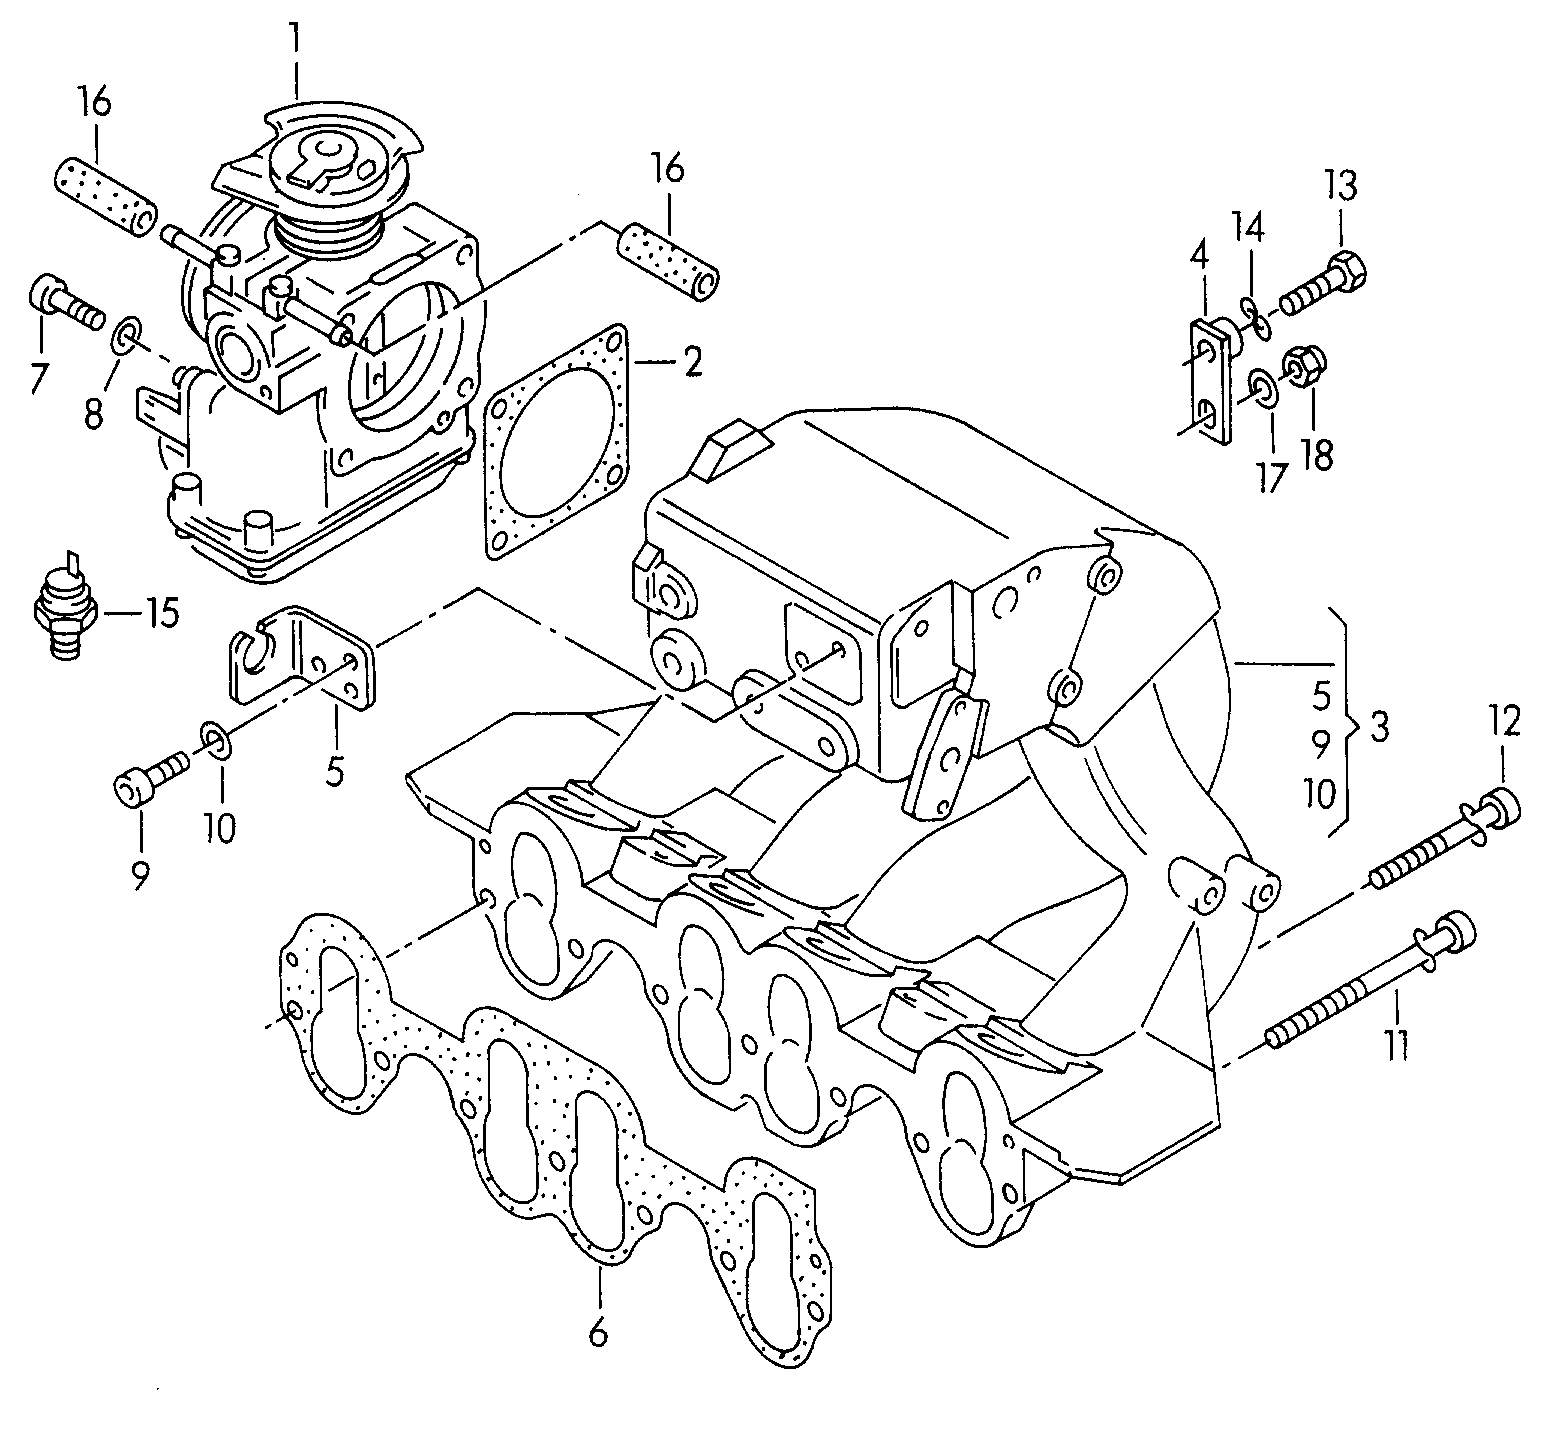 intake system; throttle valve control element - Golf Cabriolet(GOC)  